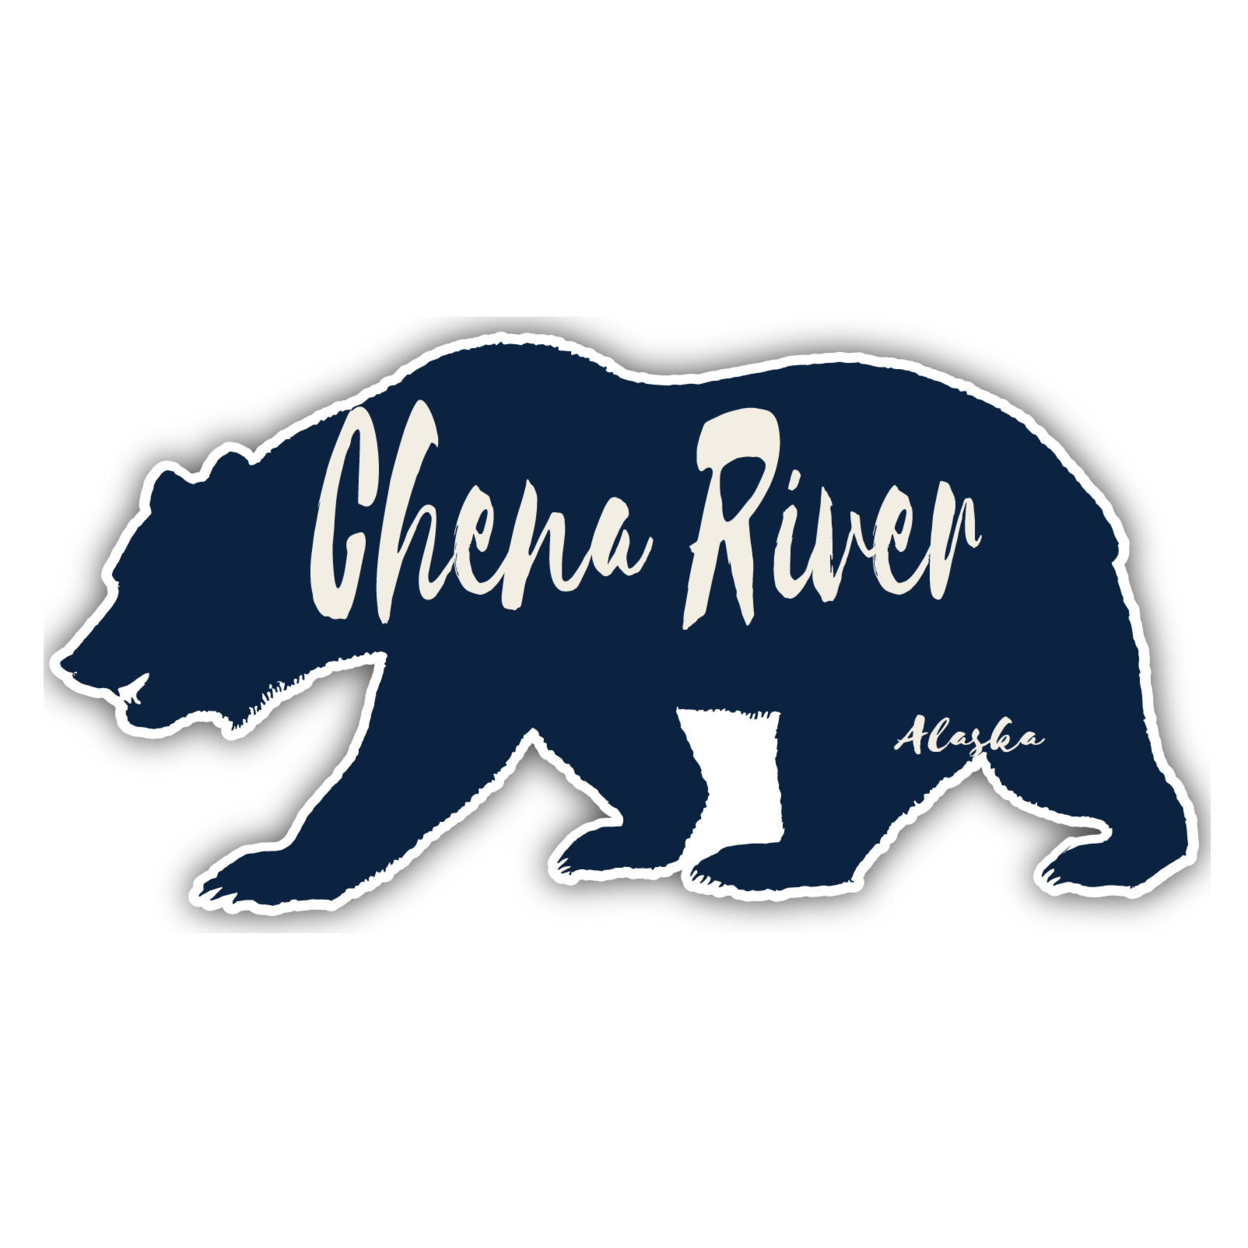 Chena River Alaska Souvenir Decorative Stickers (Choose Theme And Size) - 4-Pack, 8-Inch, Bear